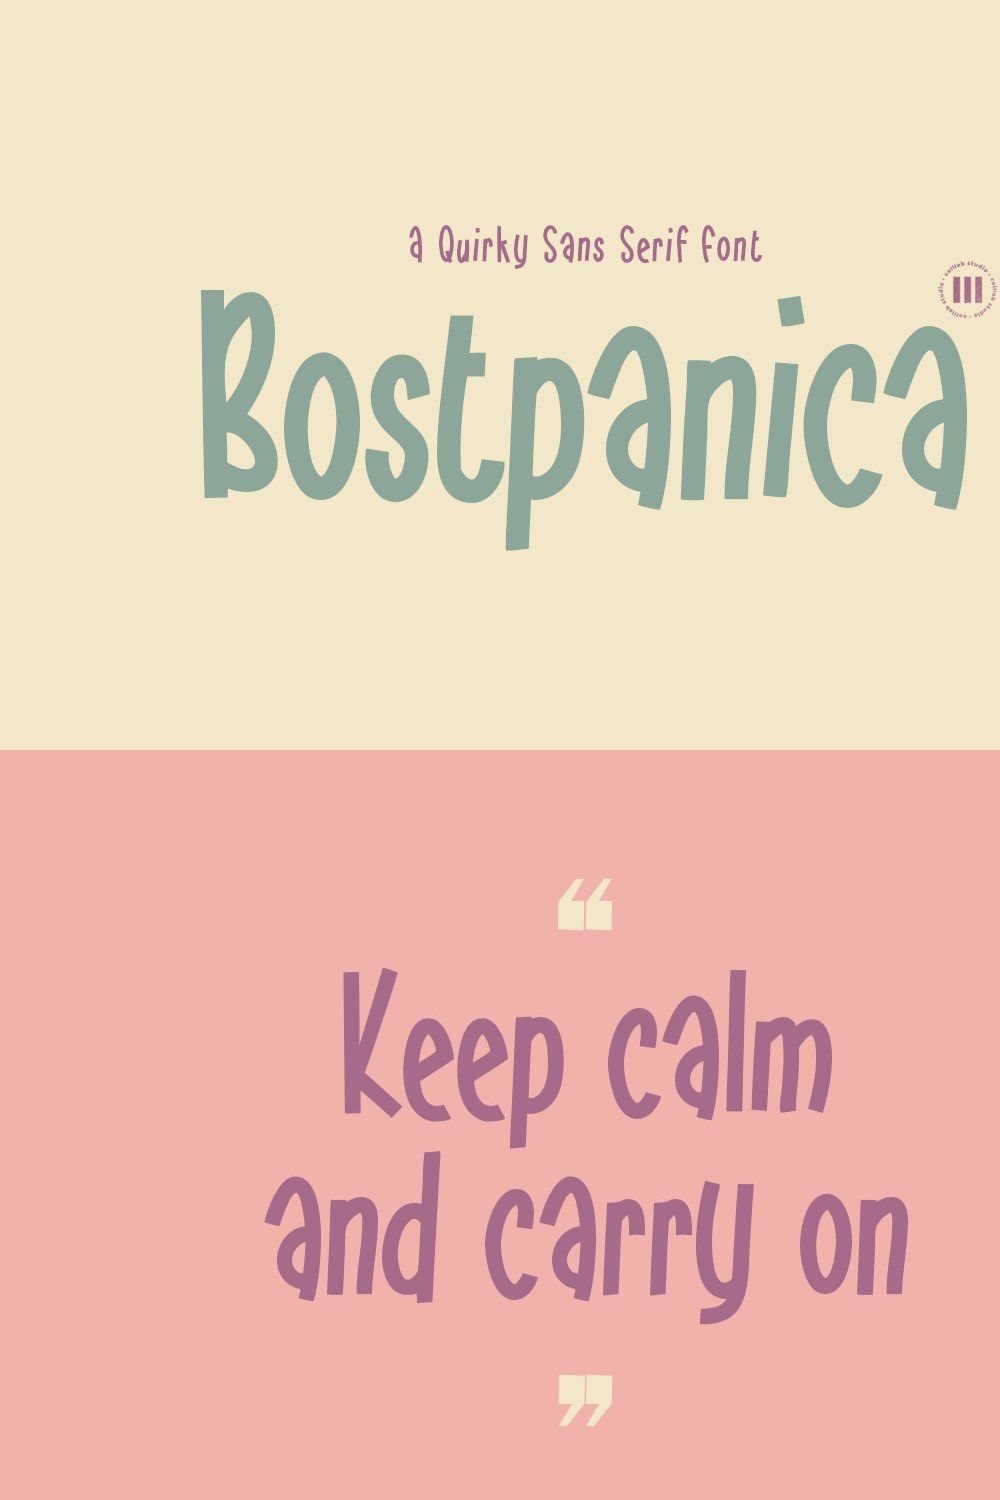 Bostpanica | A Quirky San Serif Font pinterest preview image.